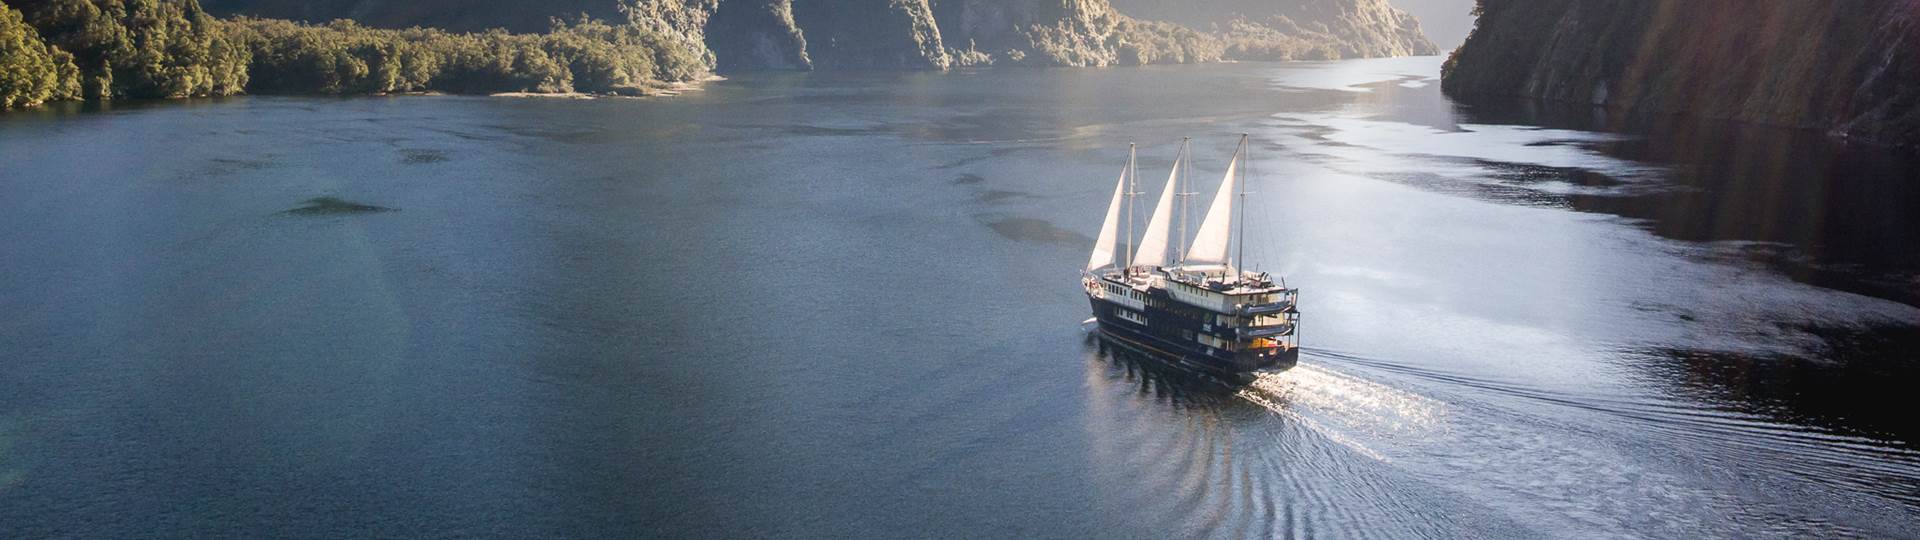 The Navigator Boat sails through Doubtful Sound